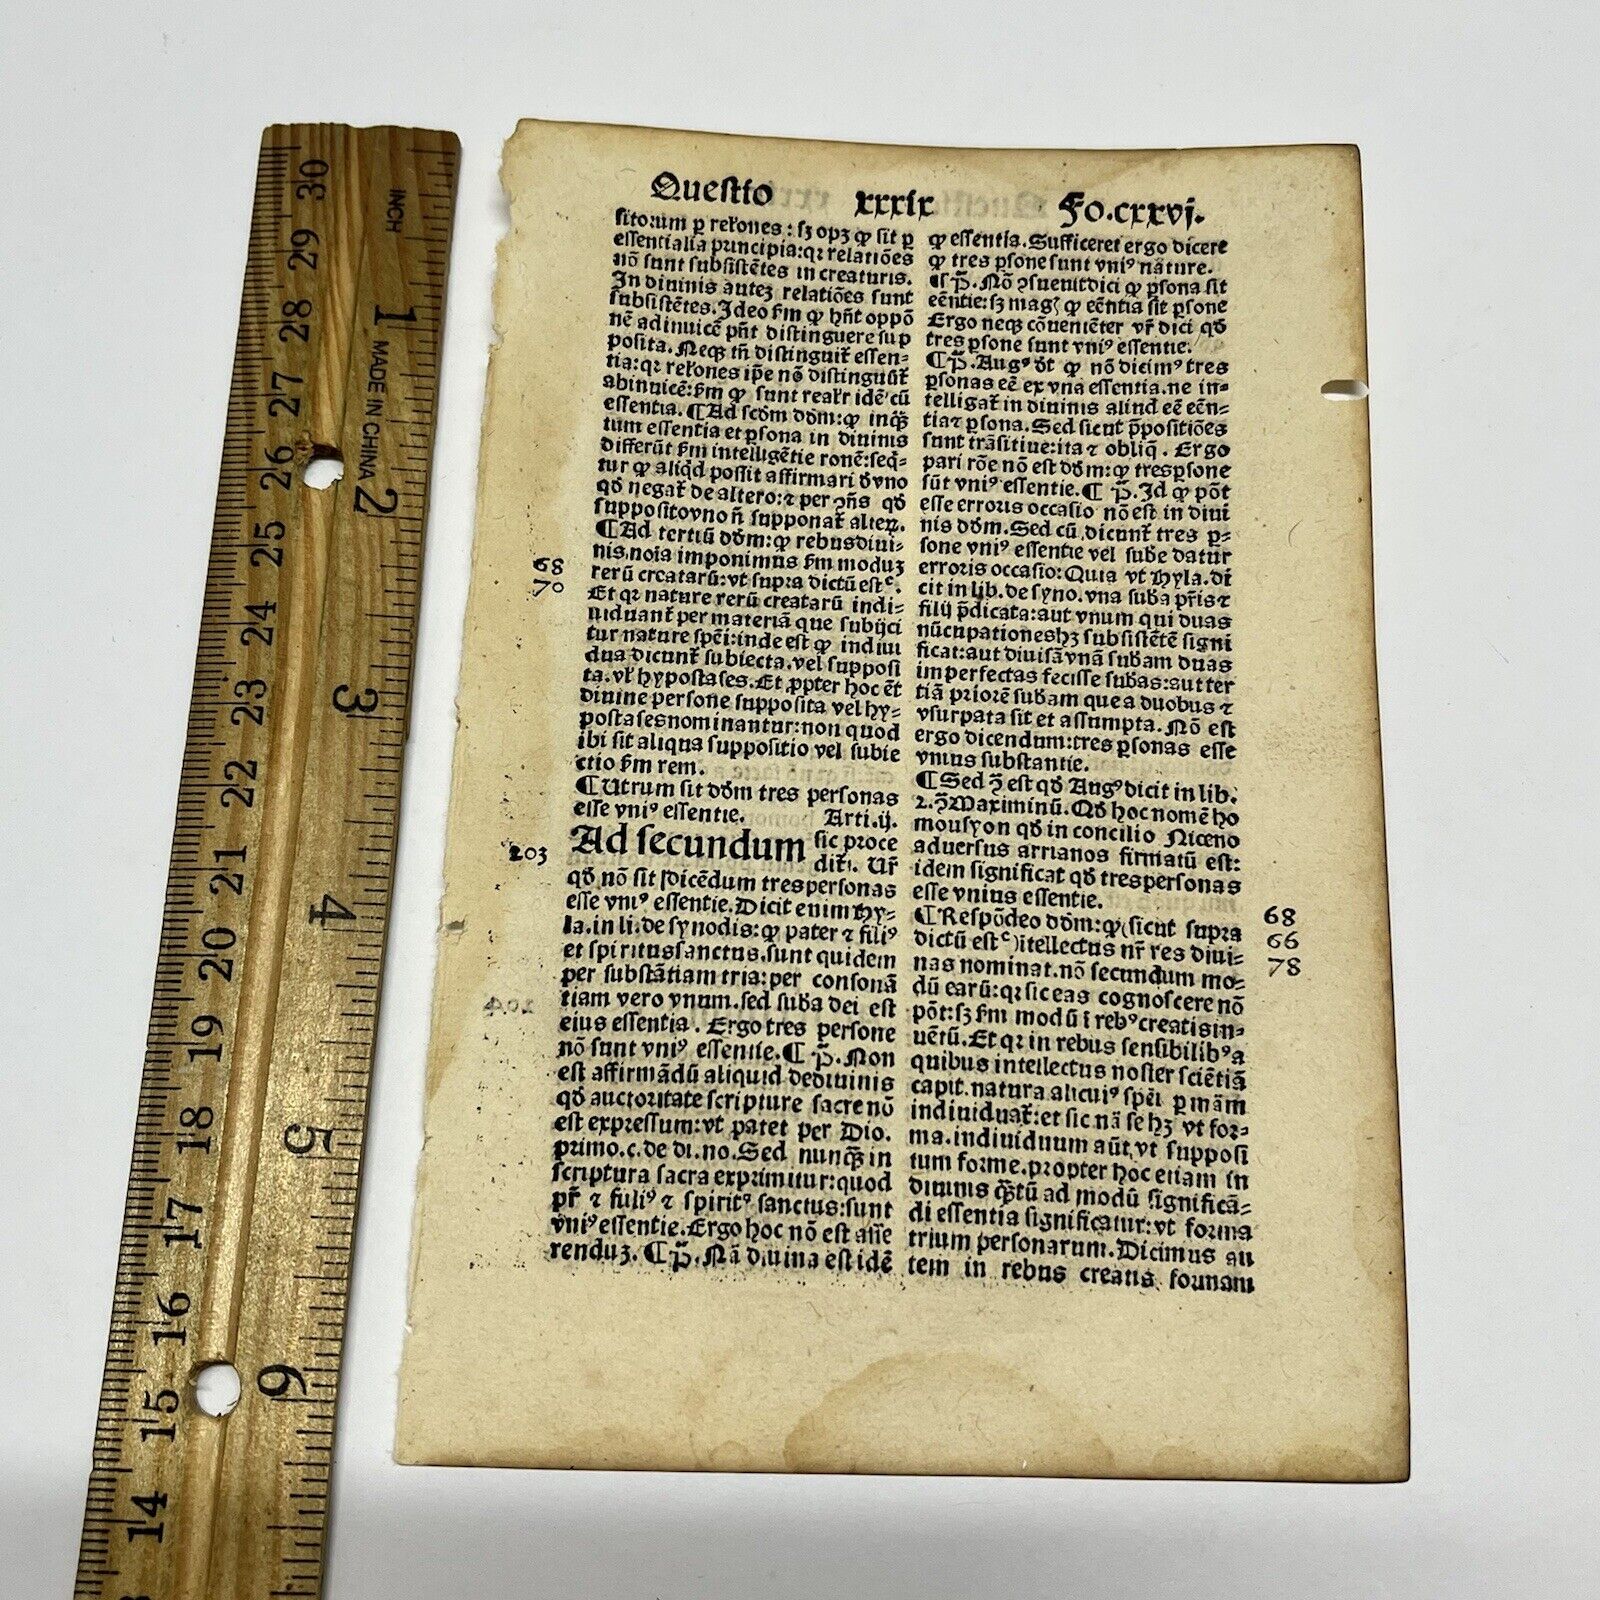 Ca. 1493 AD Medieval European Renaissance Era Book Leaf Incunabula Manuscript